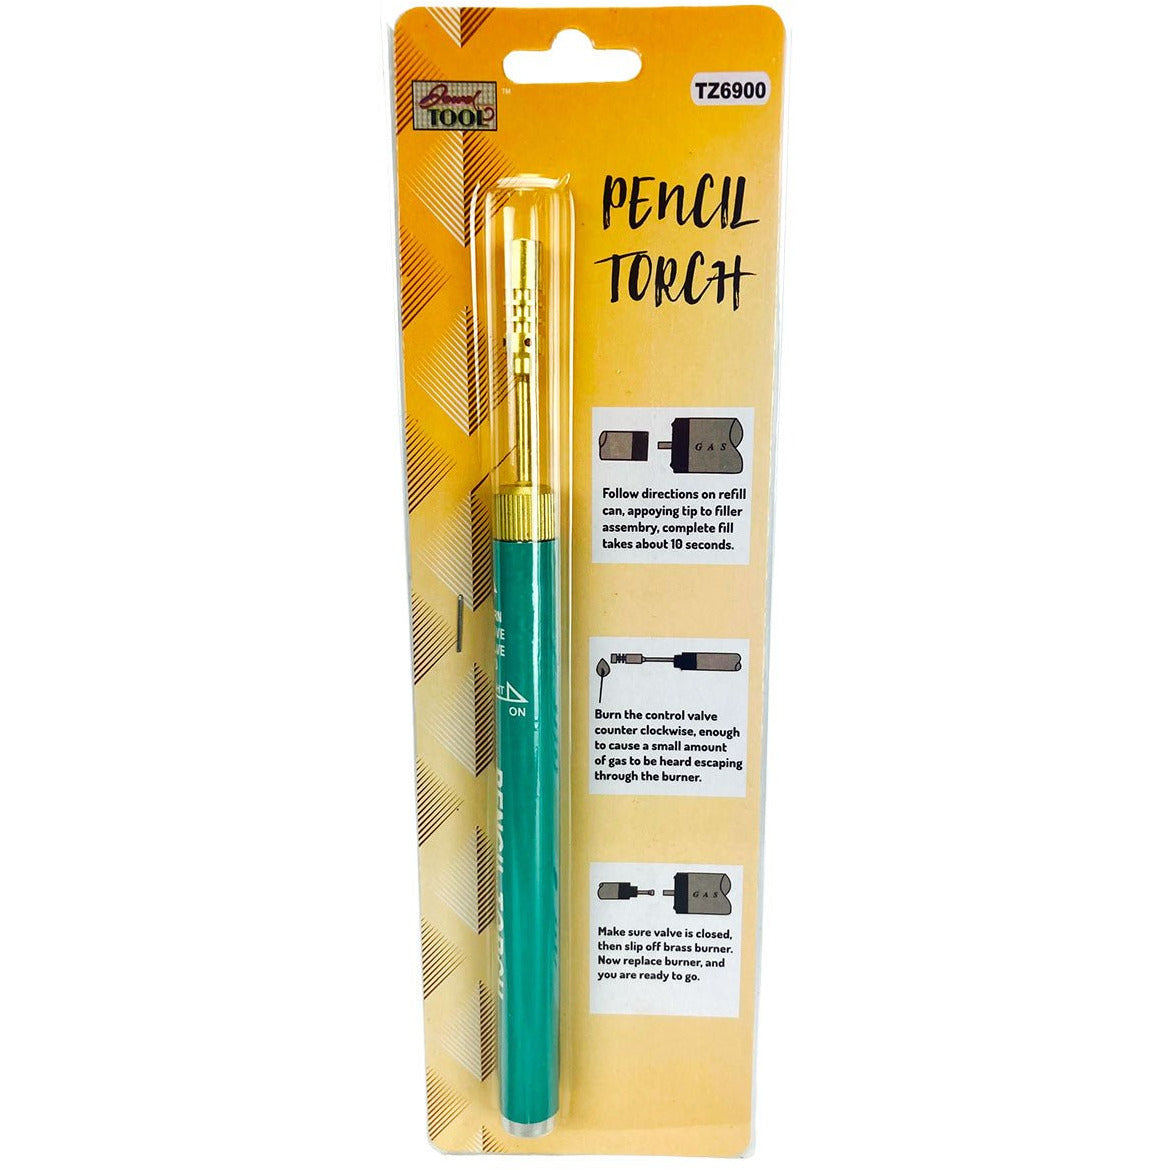 Pencil Torch - CR-06900 - ToolUSA